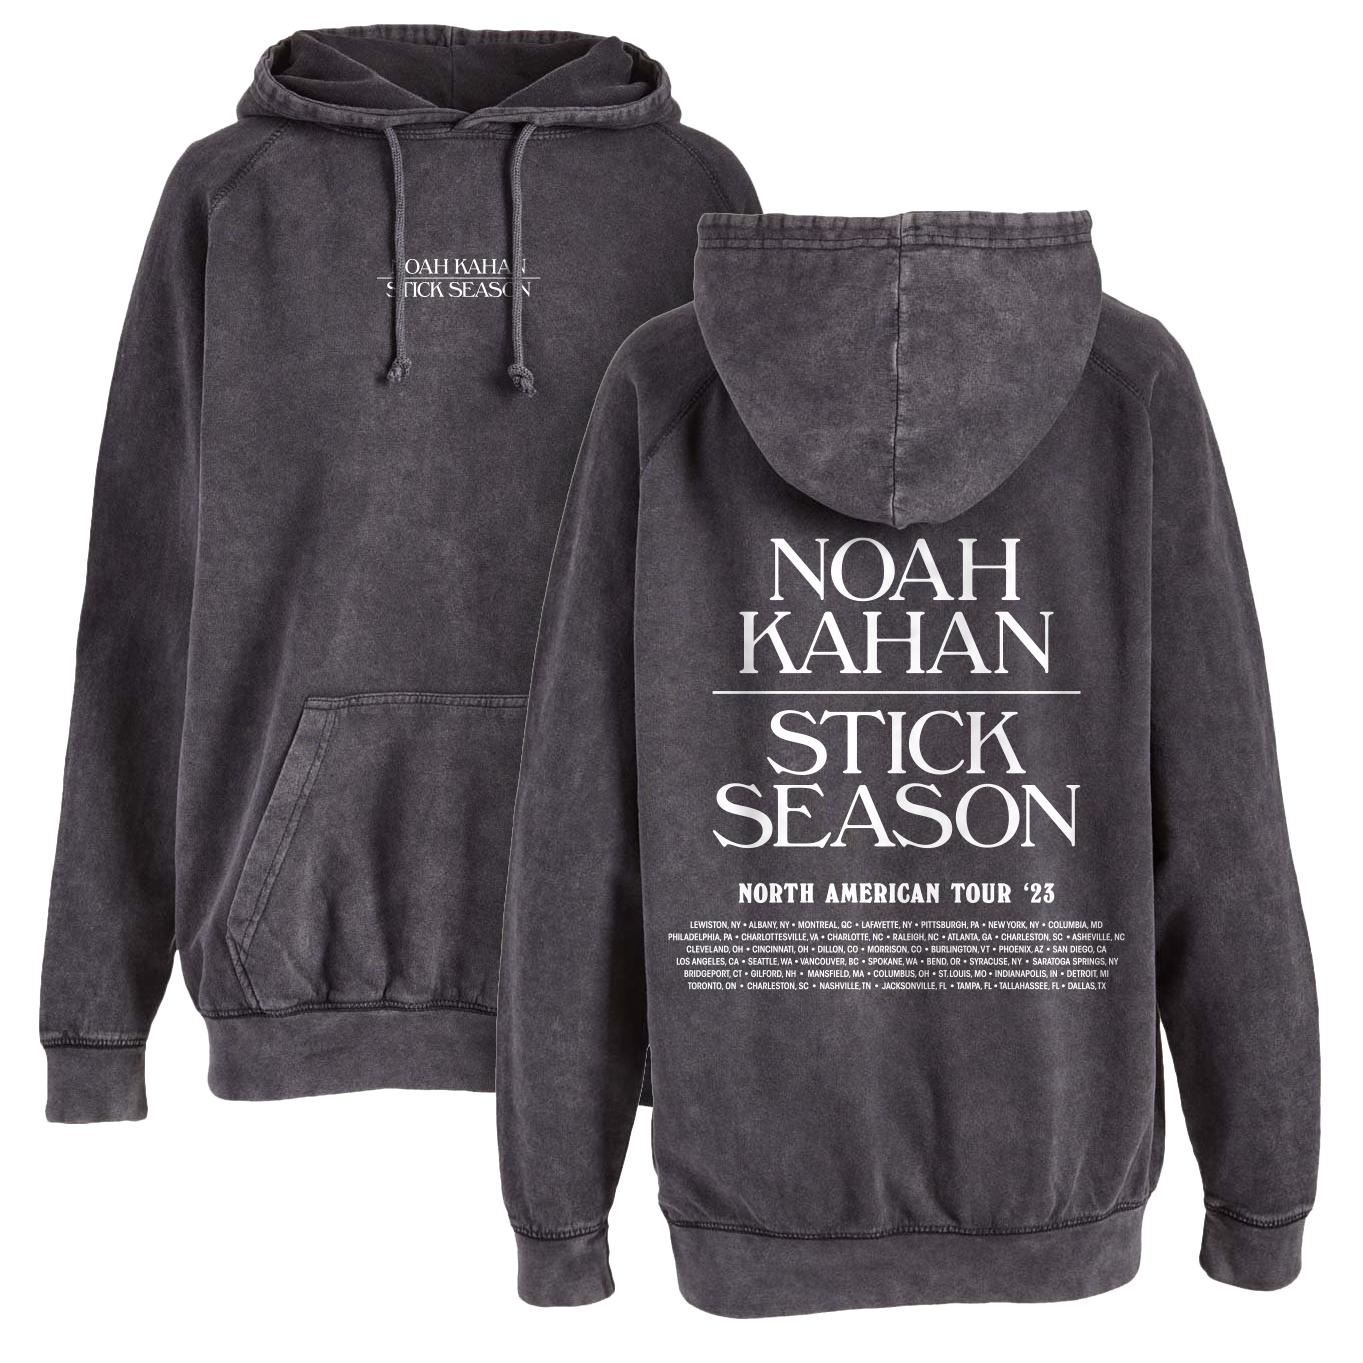 Noah Kahan Minimal hoodie in vintage black mineral wash. North American Tour '23 tour dates on back.